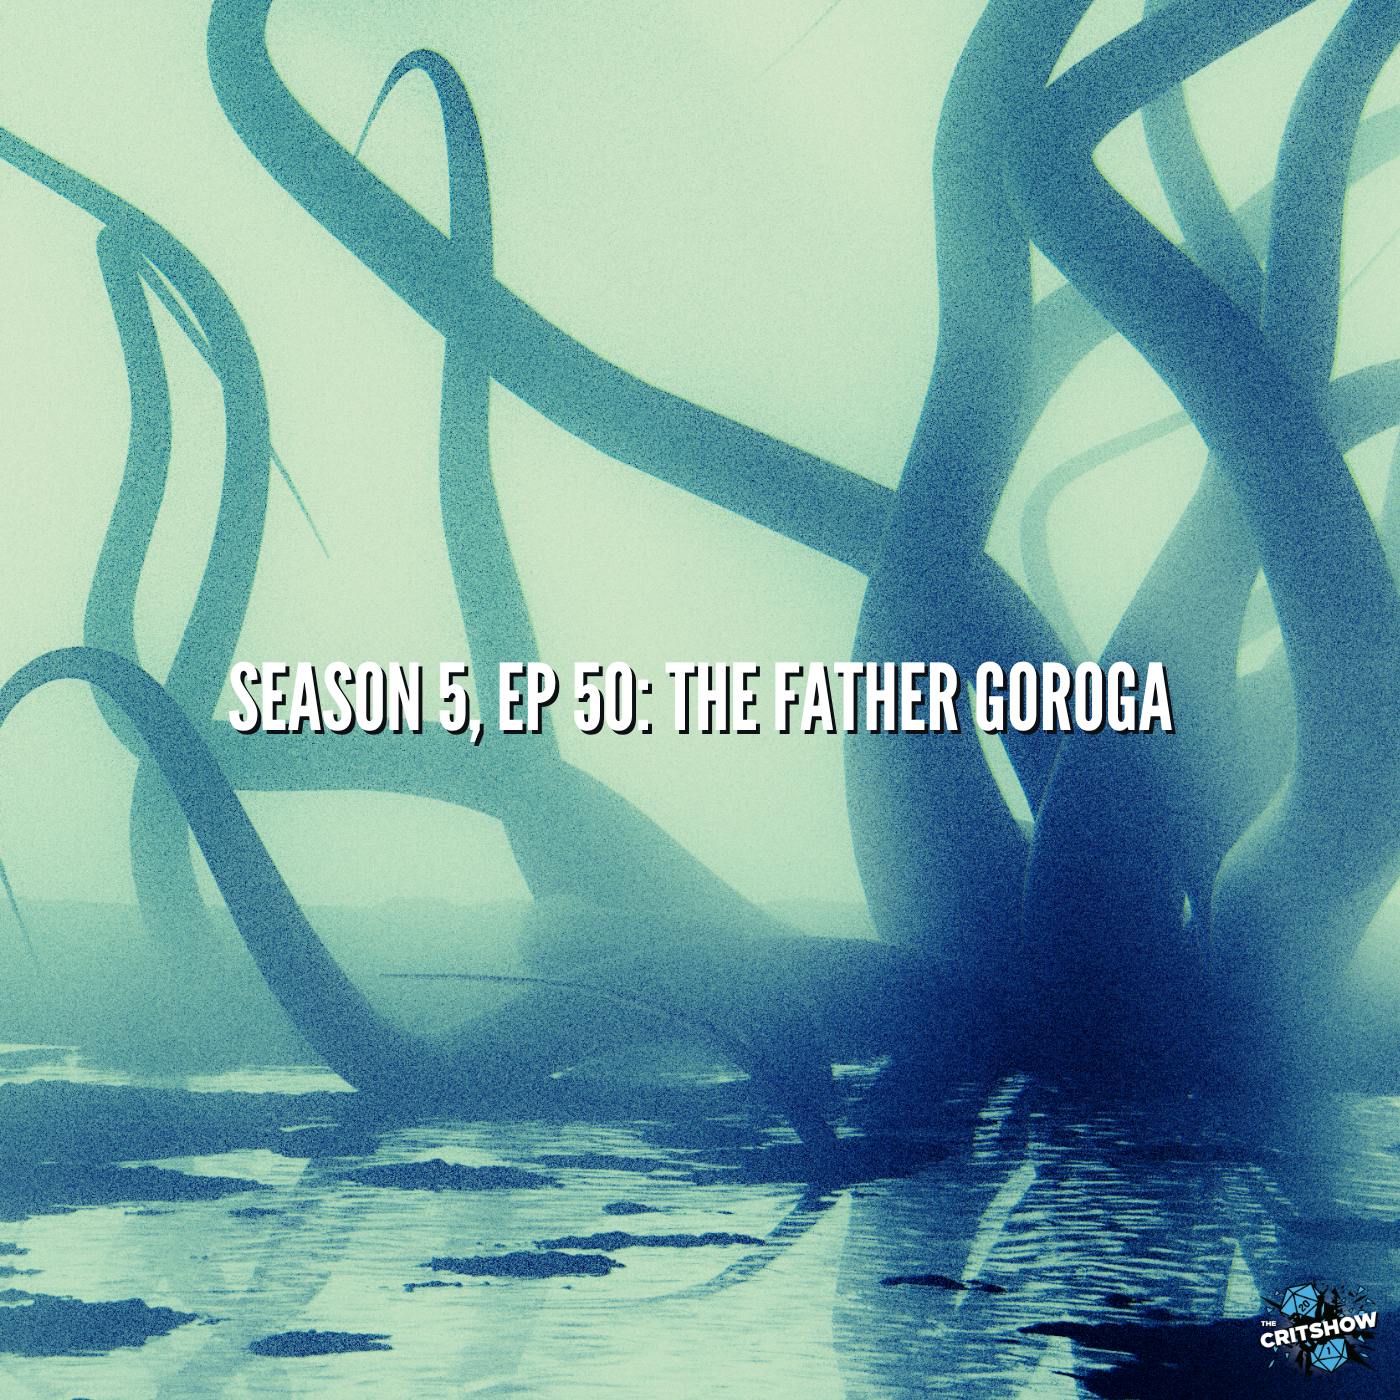 The Father Goroga (S5, E50)